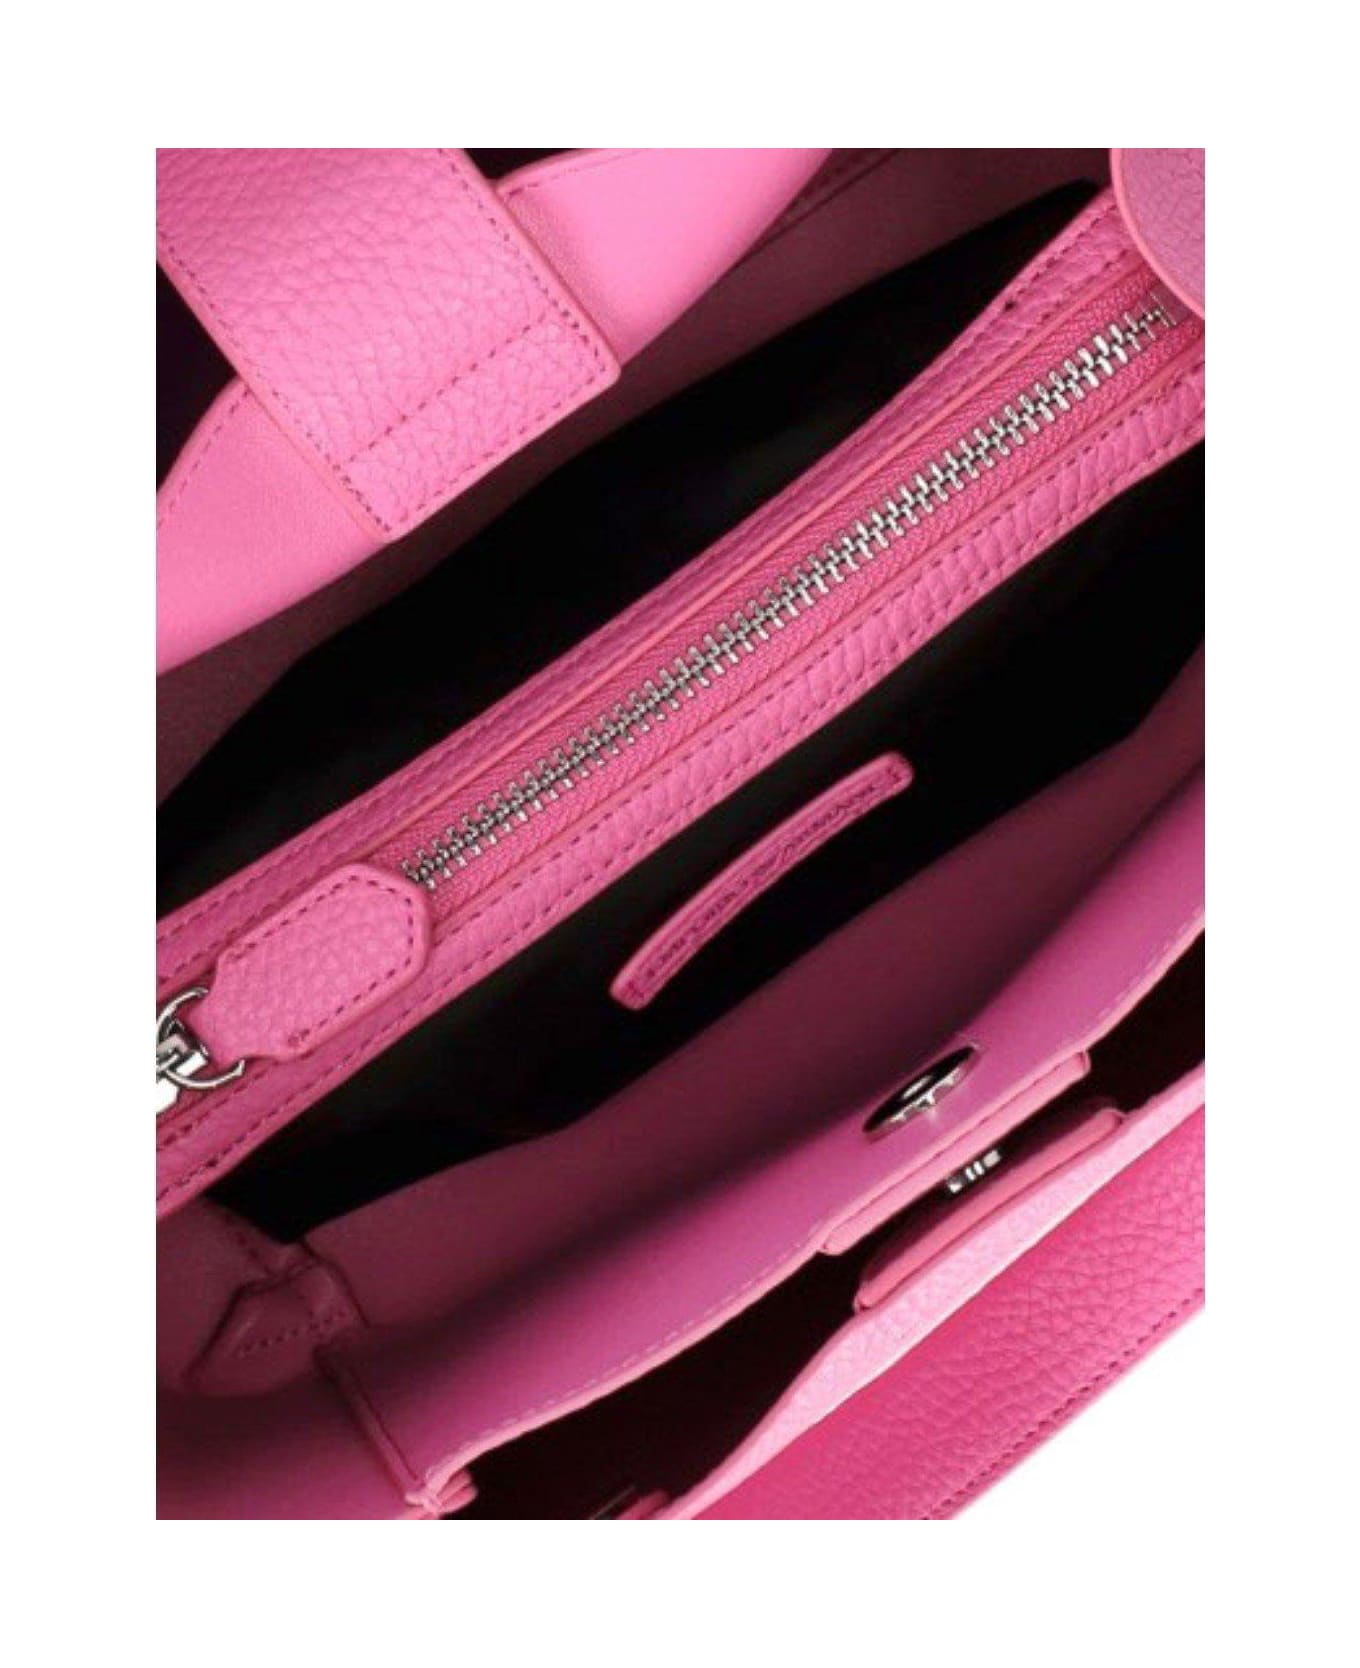 Emporio Armani Logo Printed Charm Tote Bag - Dark Pink Rosa